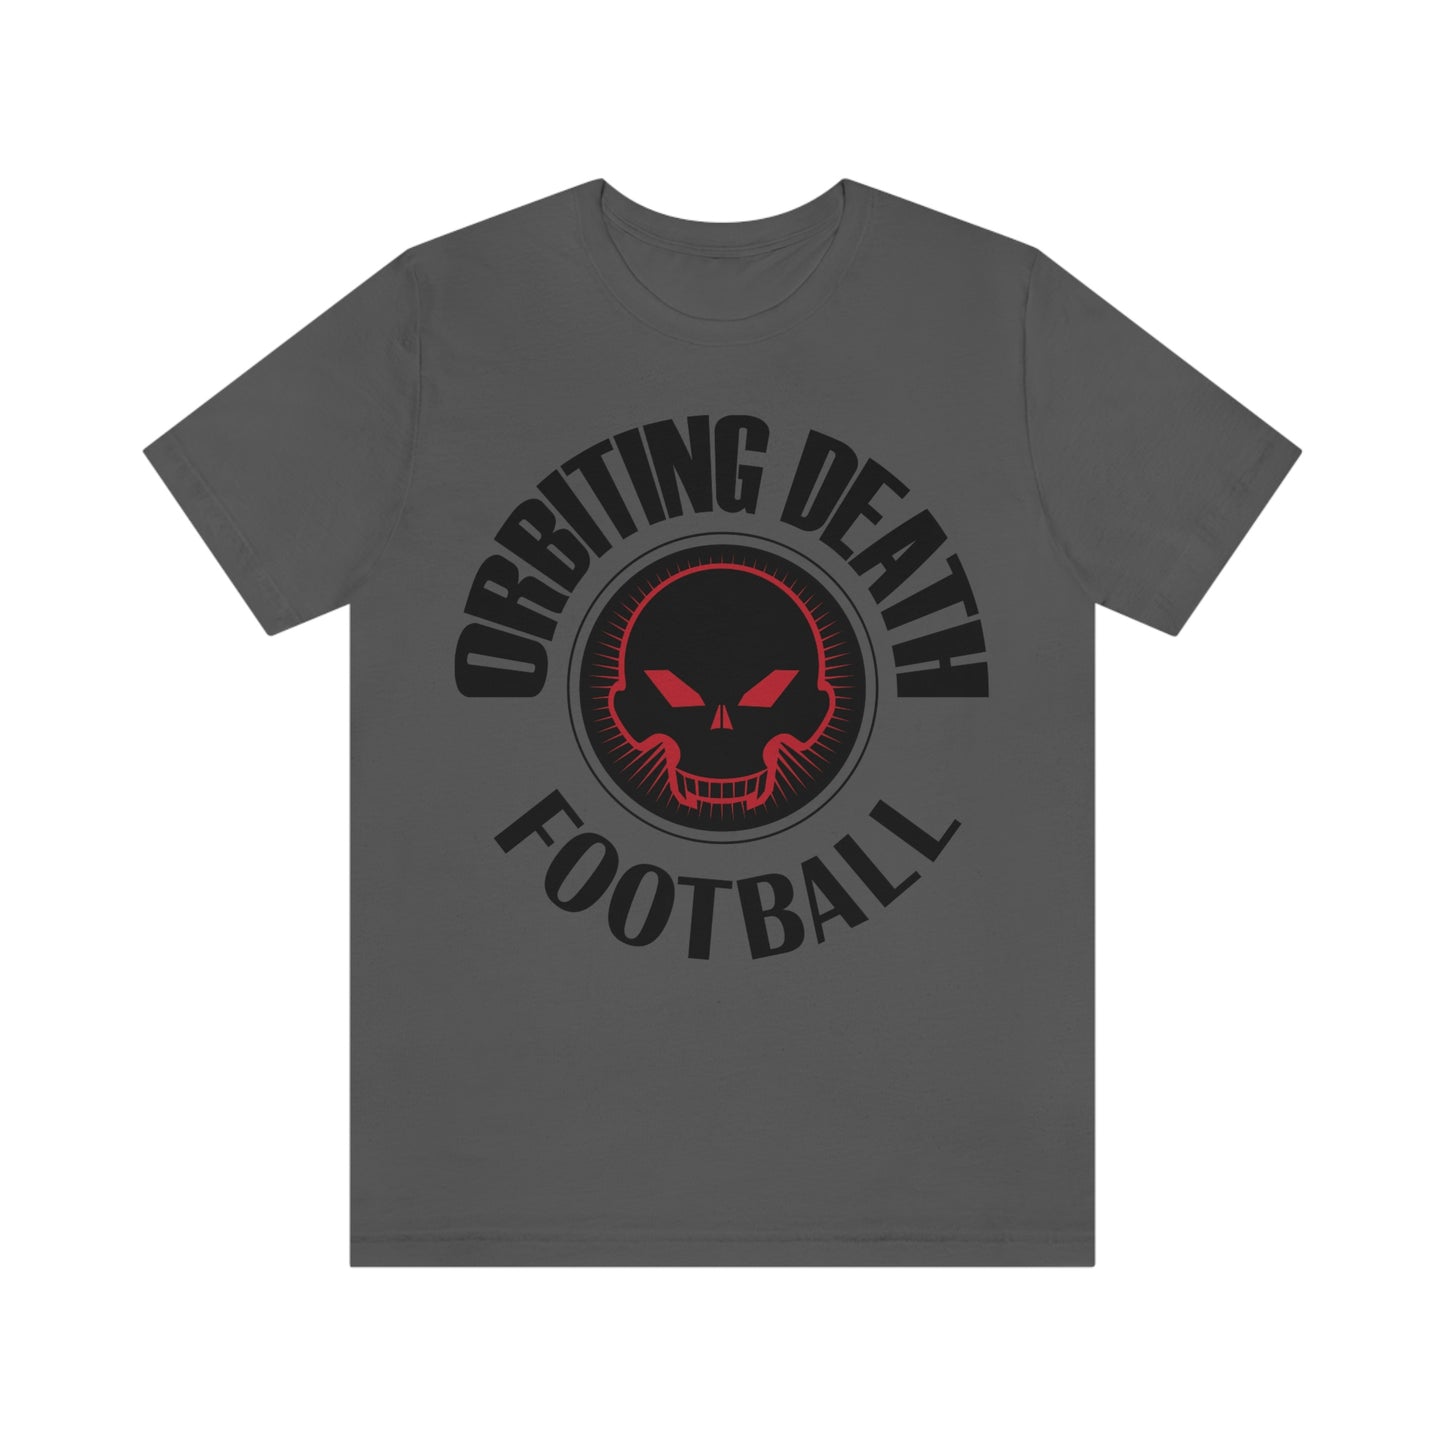 Orbiting Death (Red Logo)